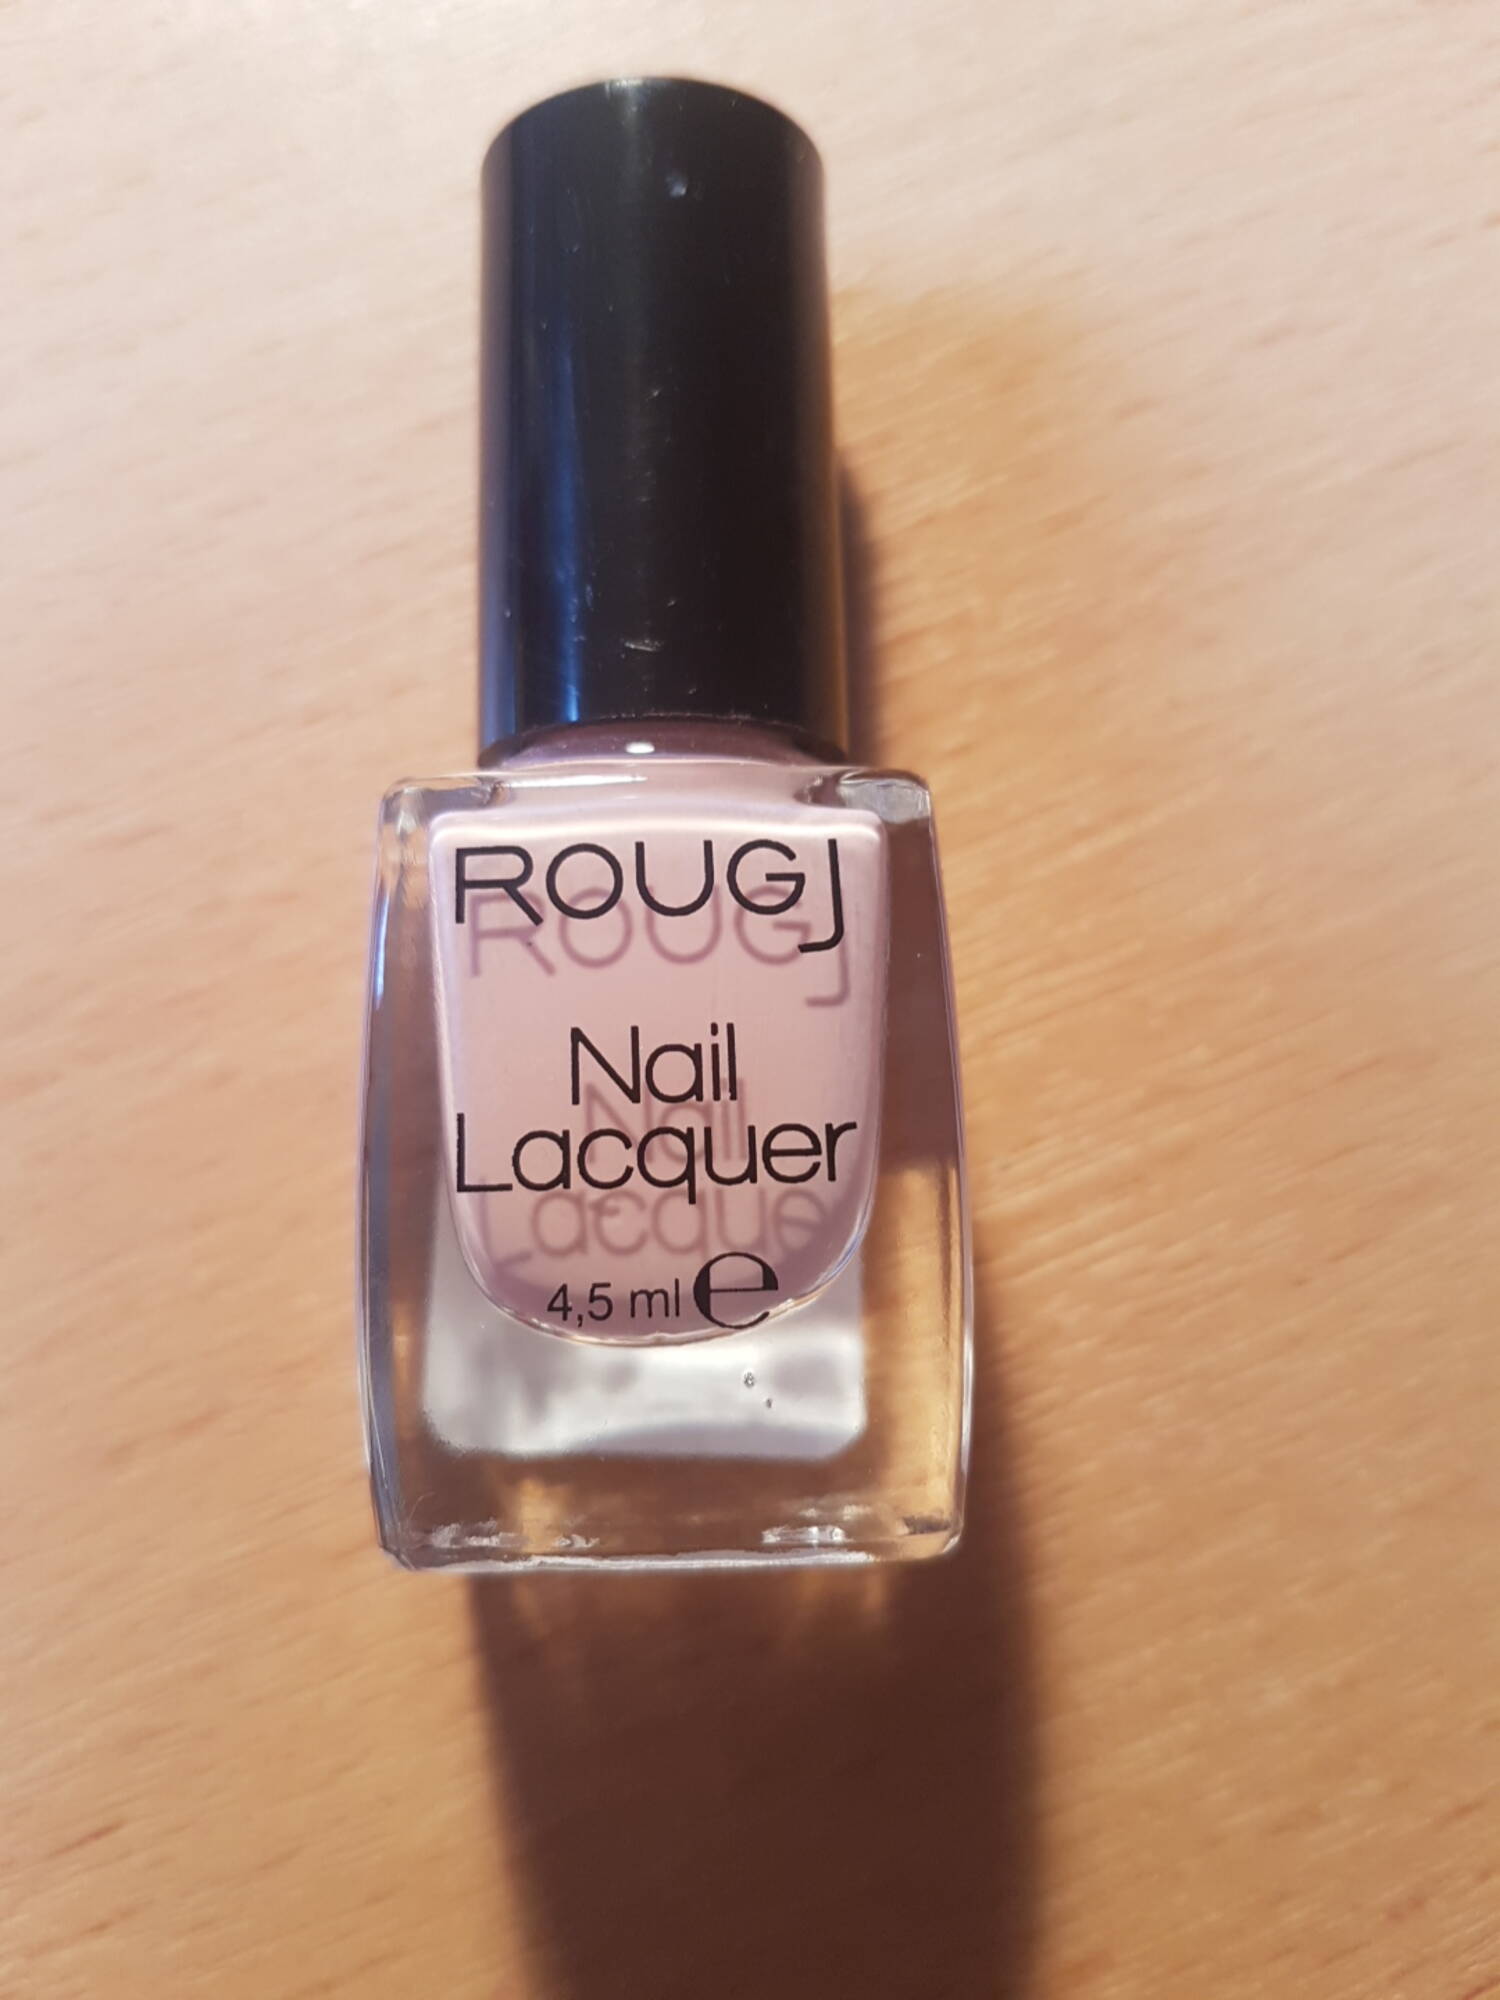 ROUGJ - Nail lacquer